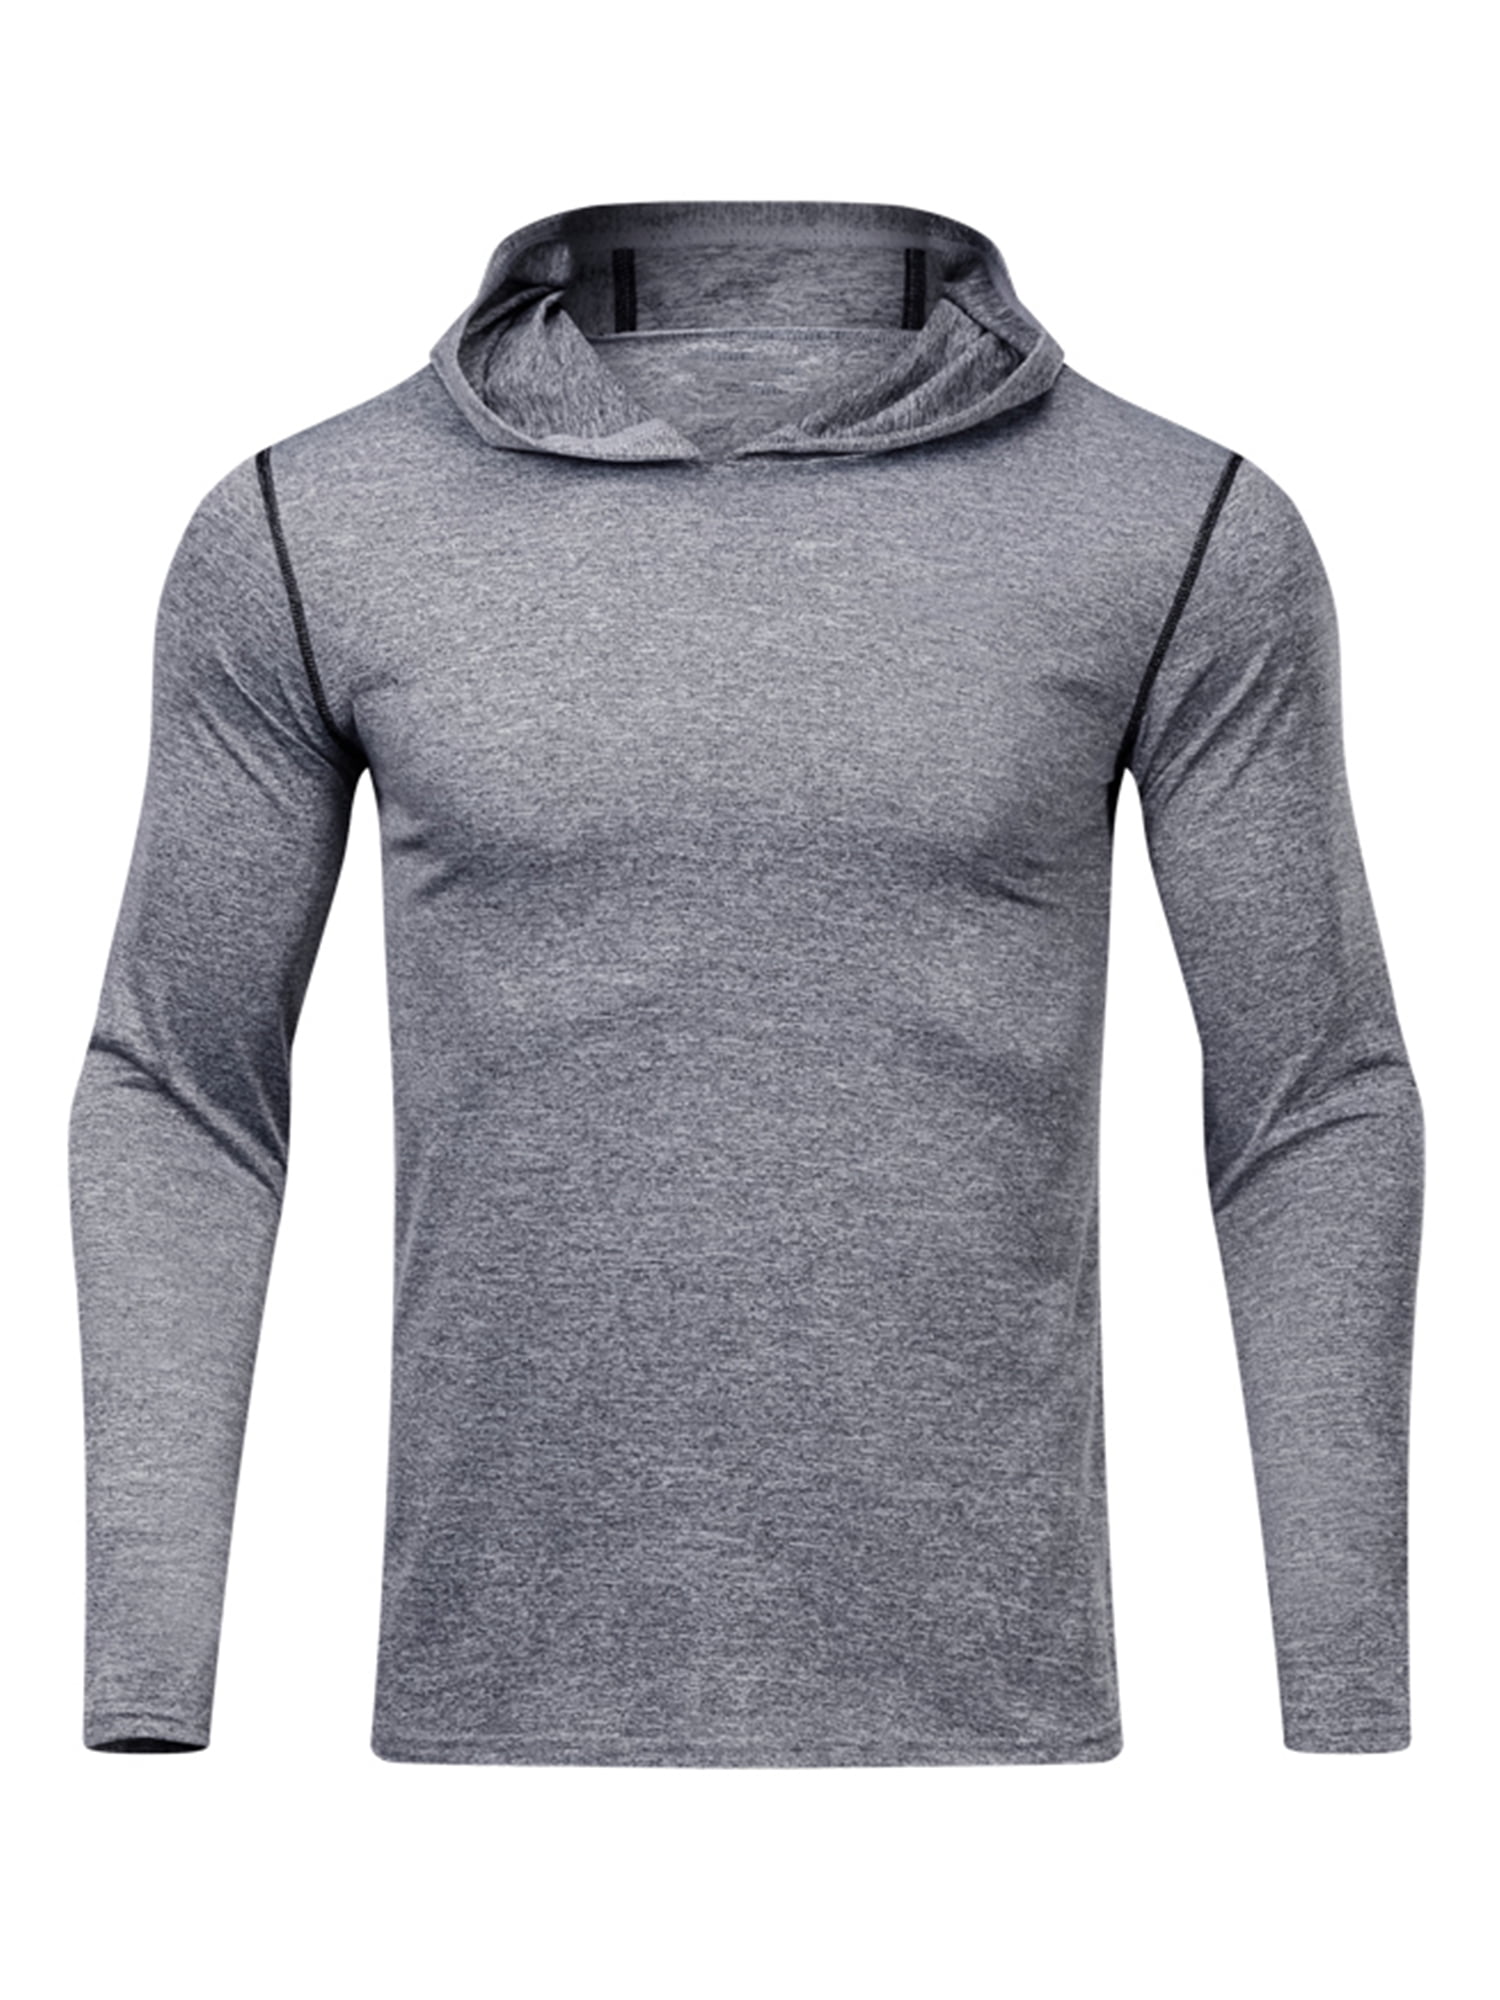 Reebok Quik Cotton Mens Sweatshirt Long Sleeve Top Gym Training 